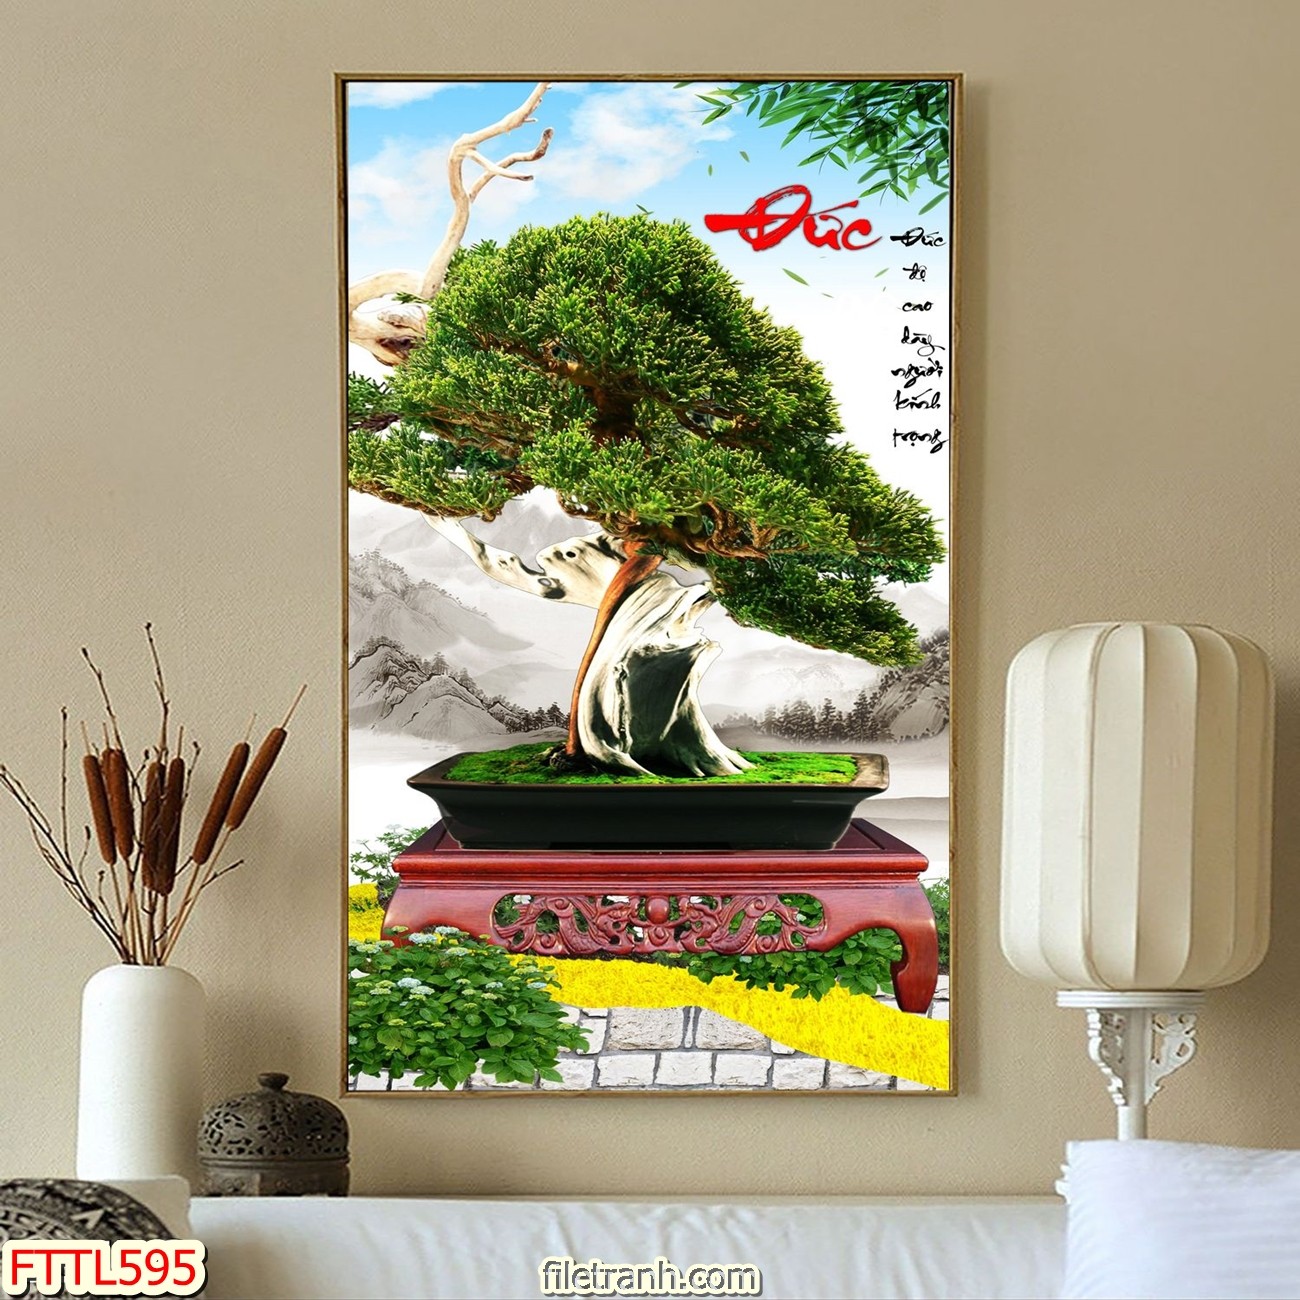 https://filetranh.com/file-tranh-chau-mai-bonsai/file-tranh-chau-mai-bonsai-fttl595.html